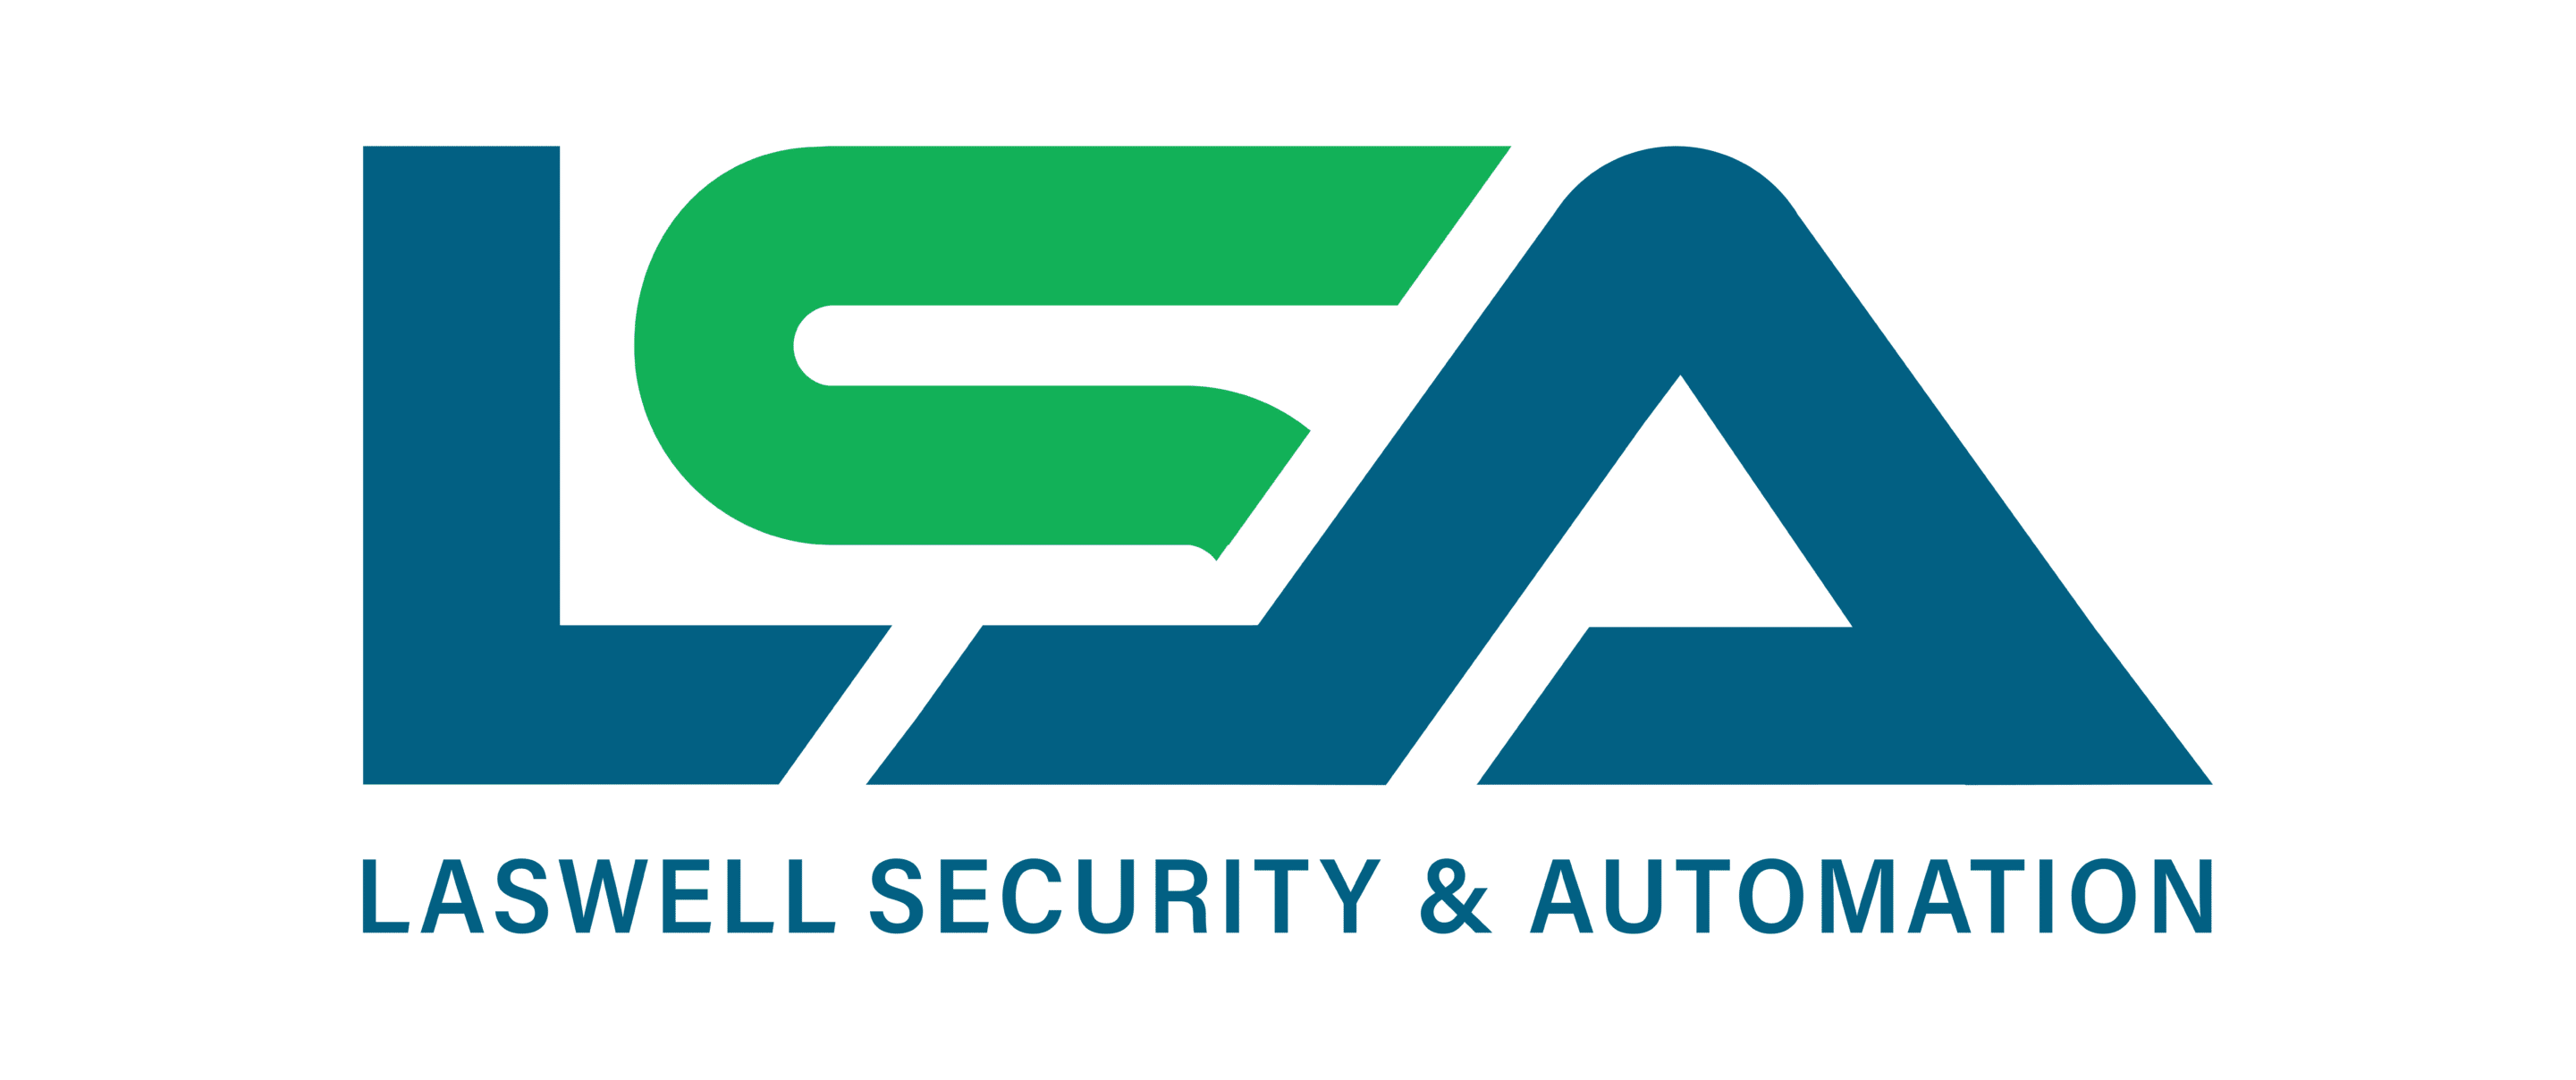 Laswell Security Main logo